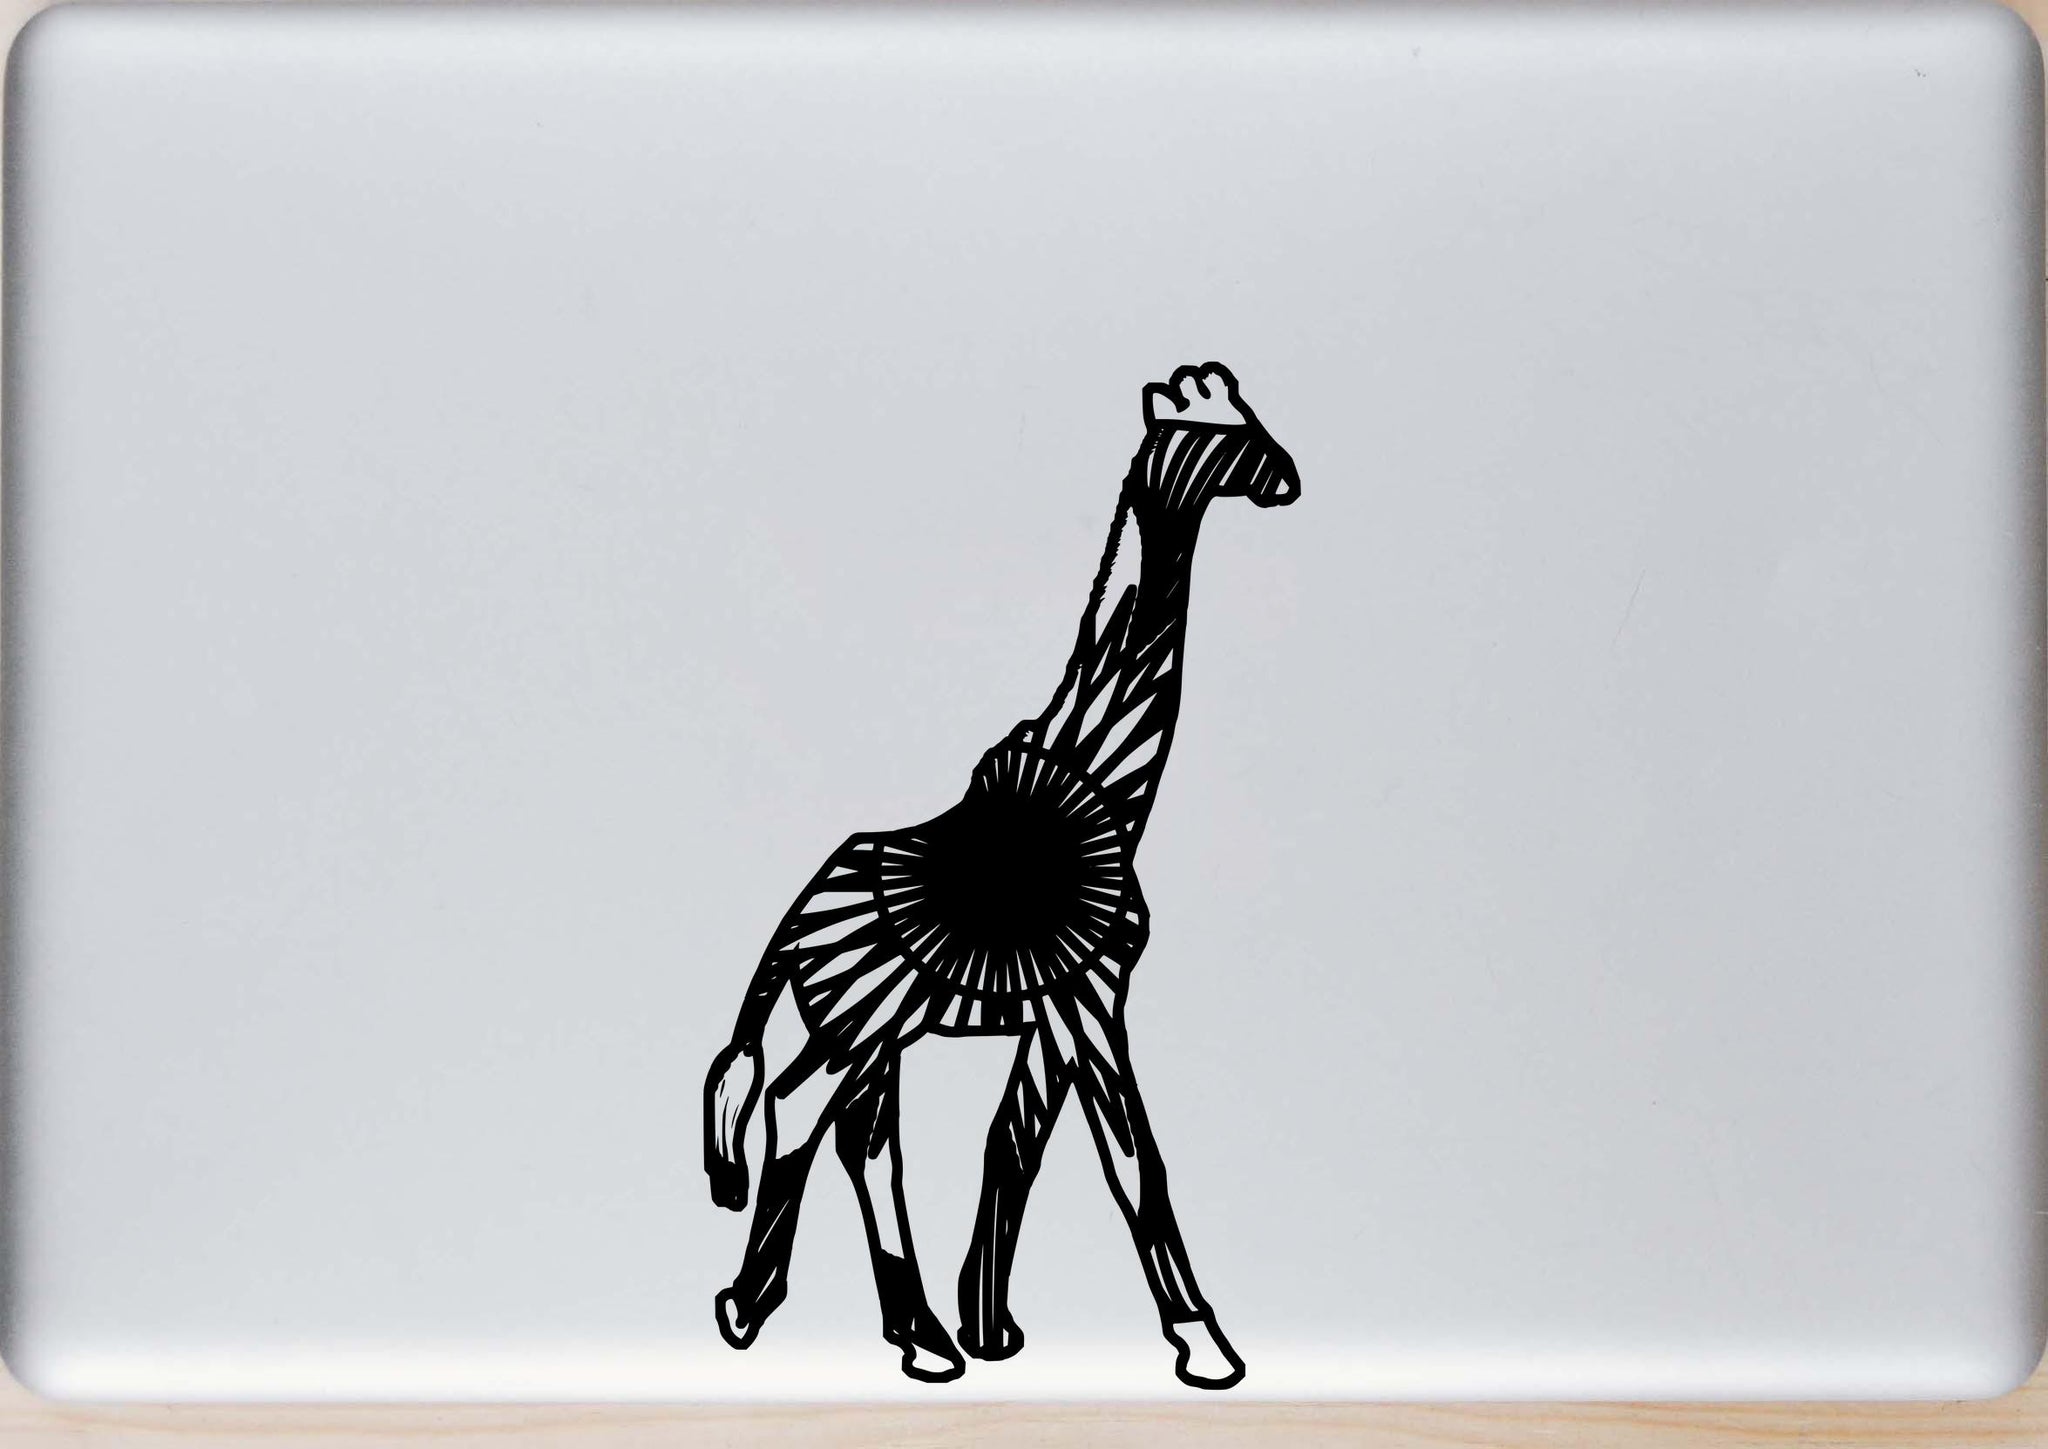 Download 37+ Free Giraffe Mandala Svg Pictures Free SVG files ...